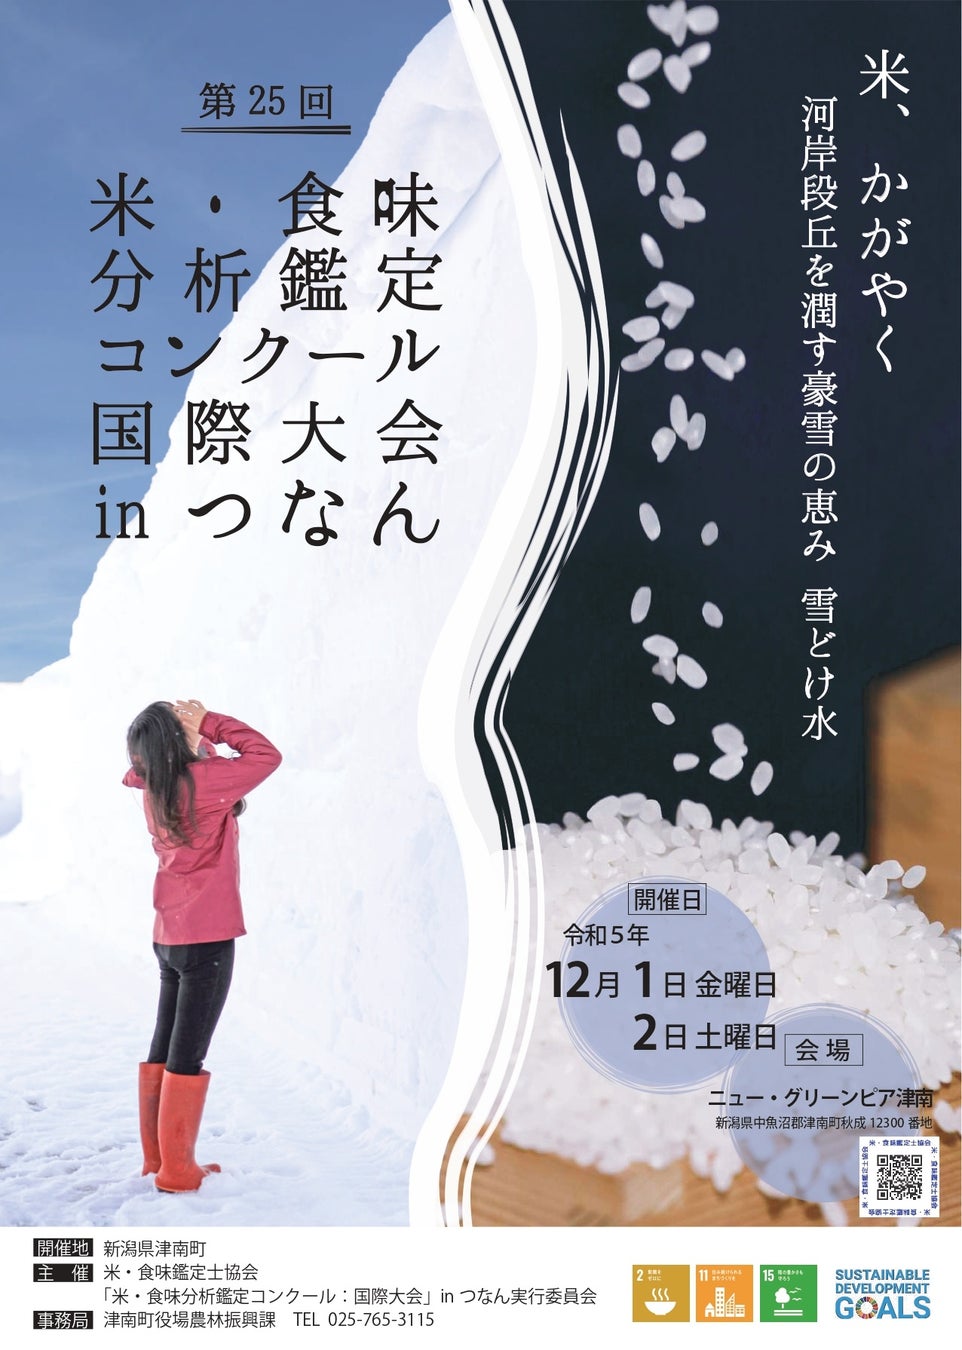 SHIBUYA109限定先行販売商品も展開！SNSで話題の「ケロトッツォ」がSHIBUYA109に！「青柳総本家」が渋谷に初出店！